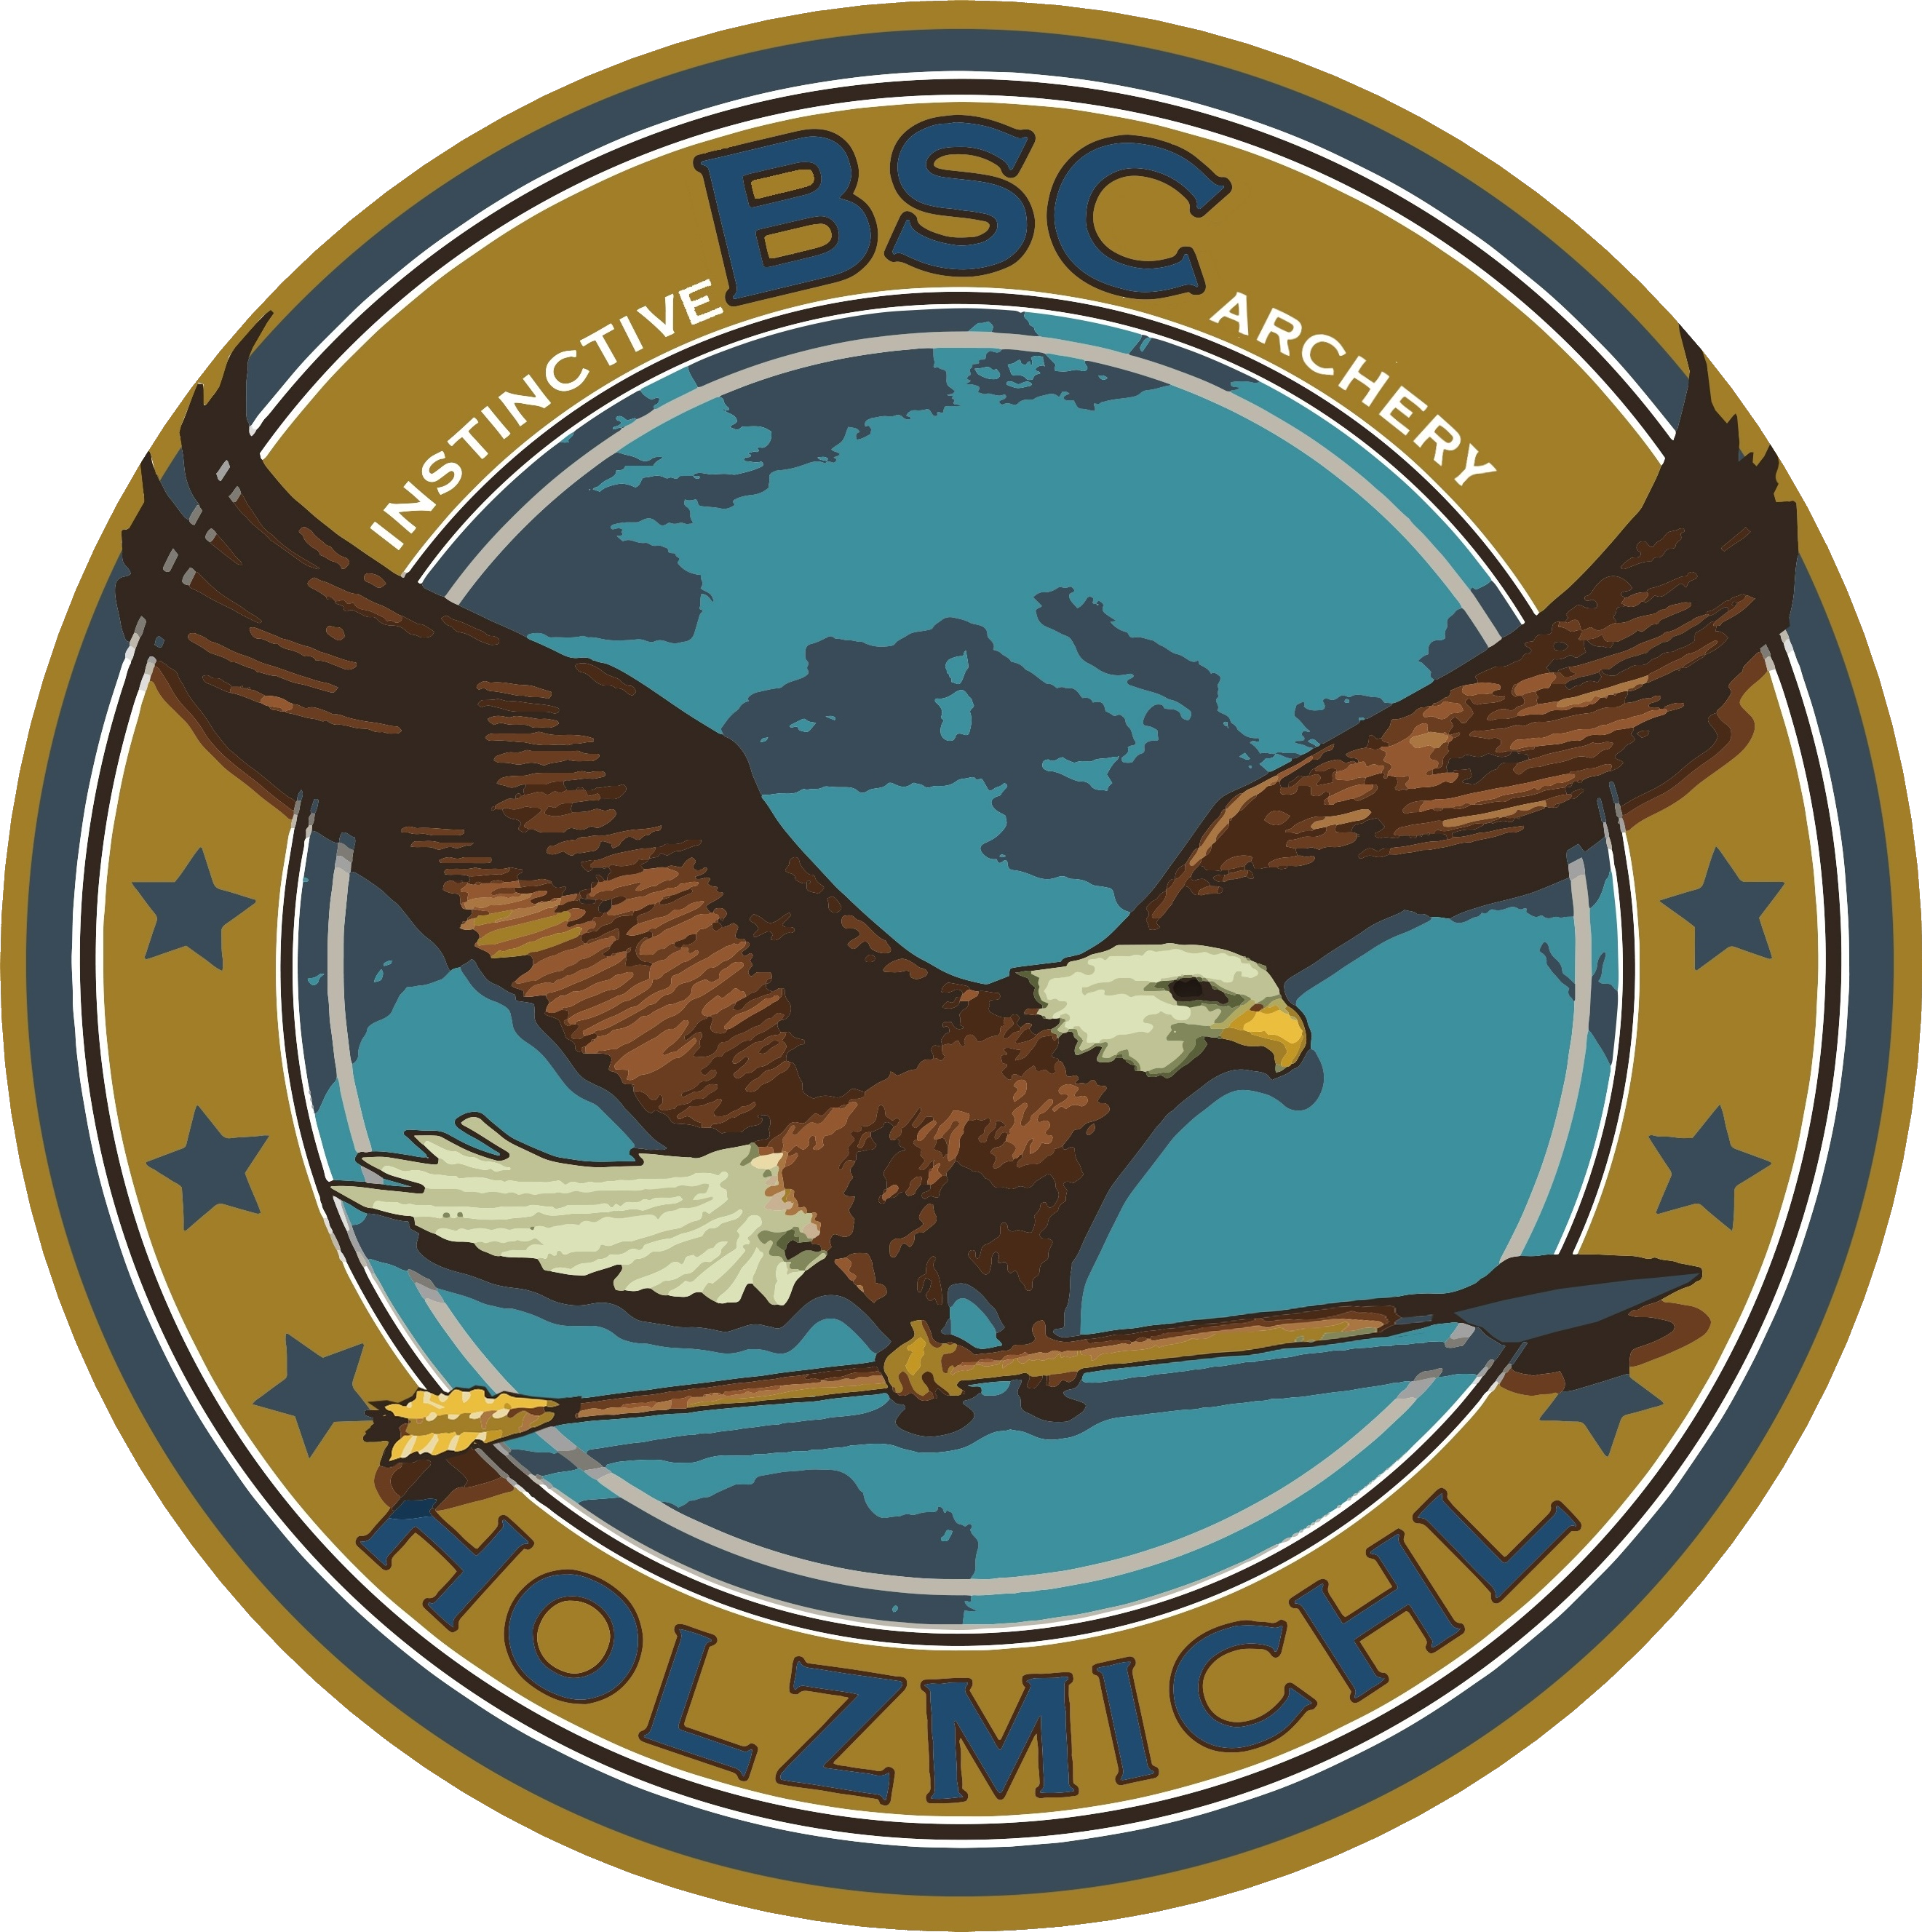 BSC Holzmichl